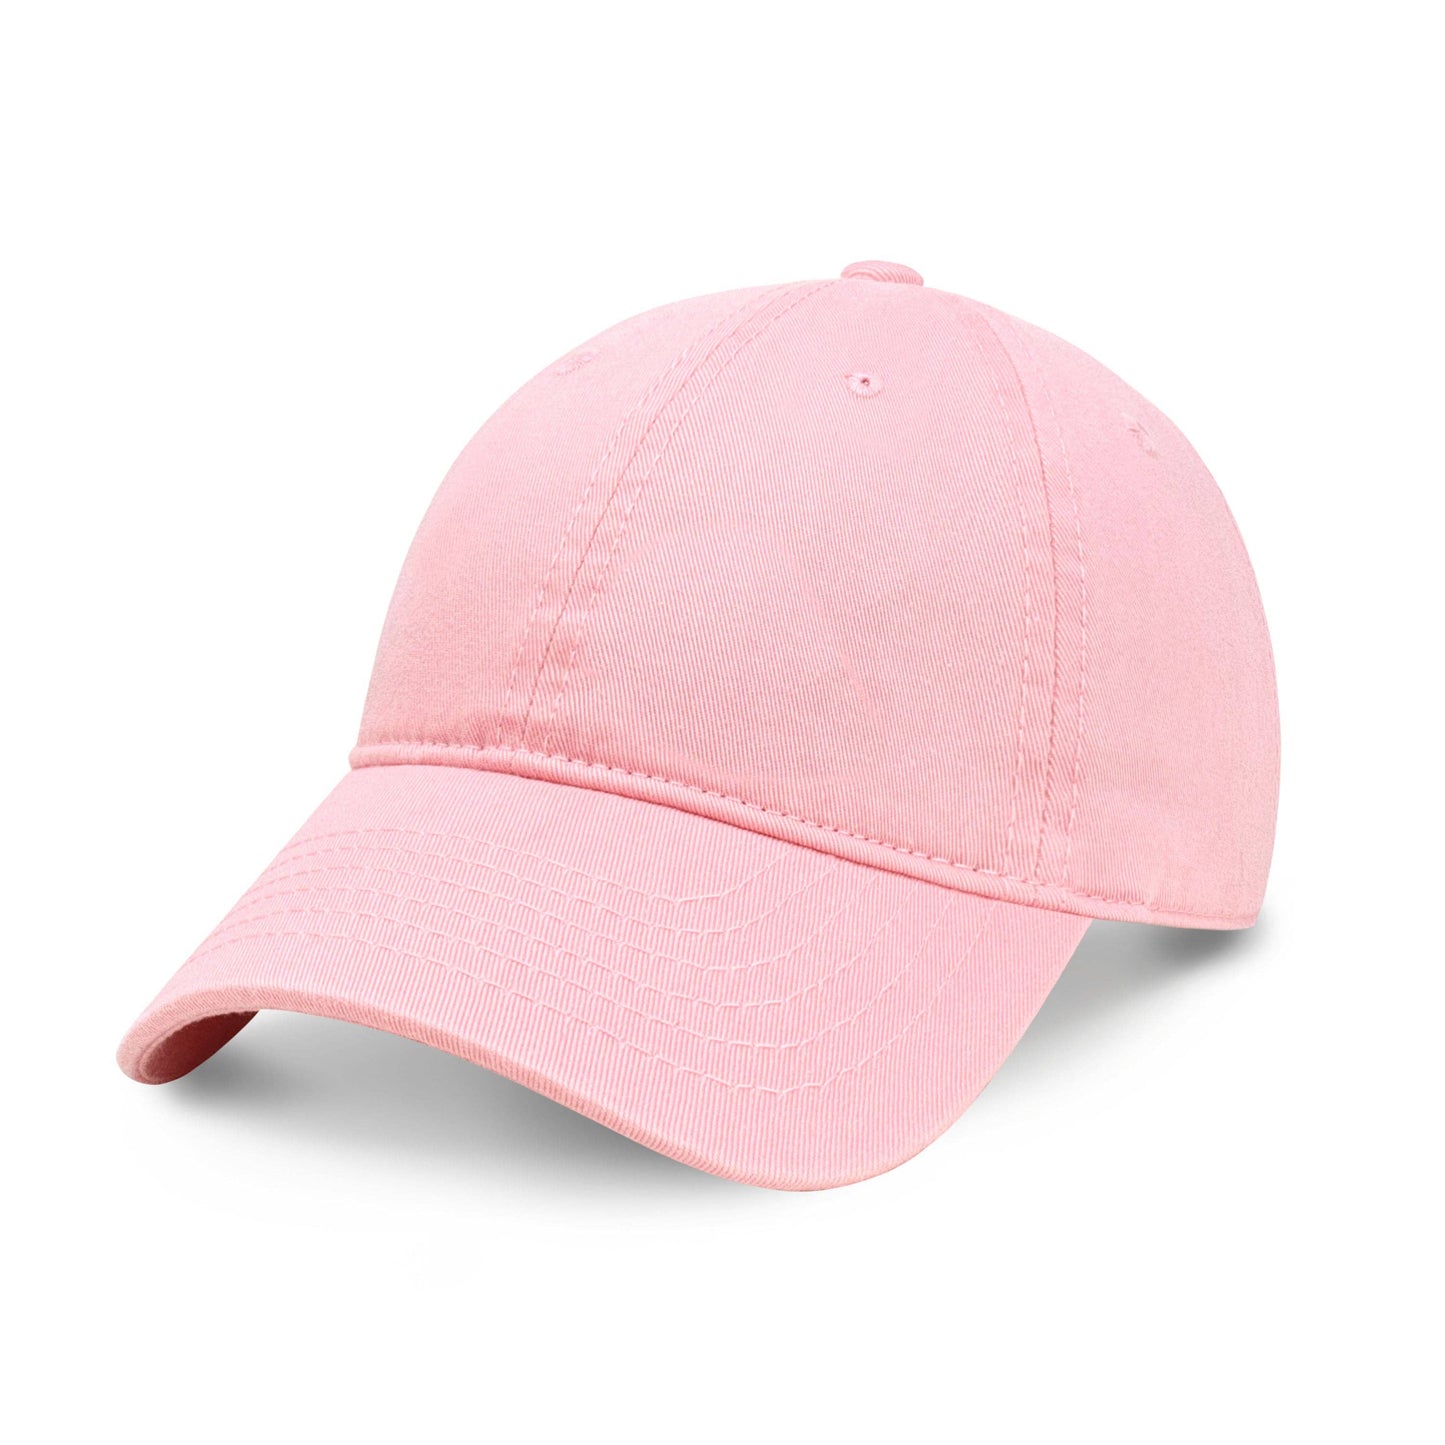 Plain Baseball Cap - Light Pink